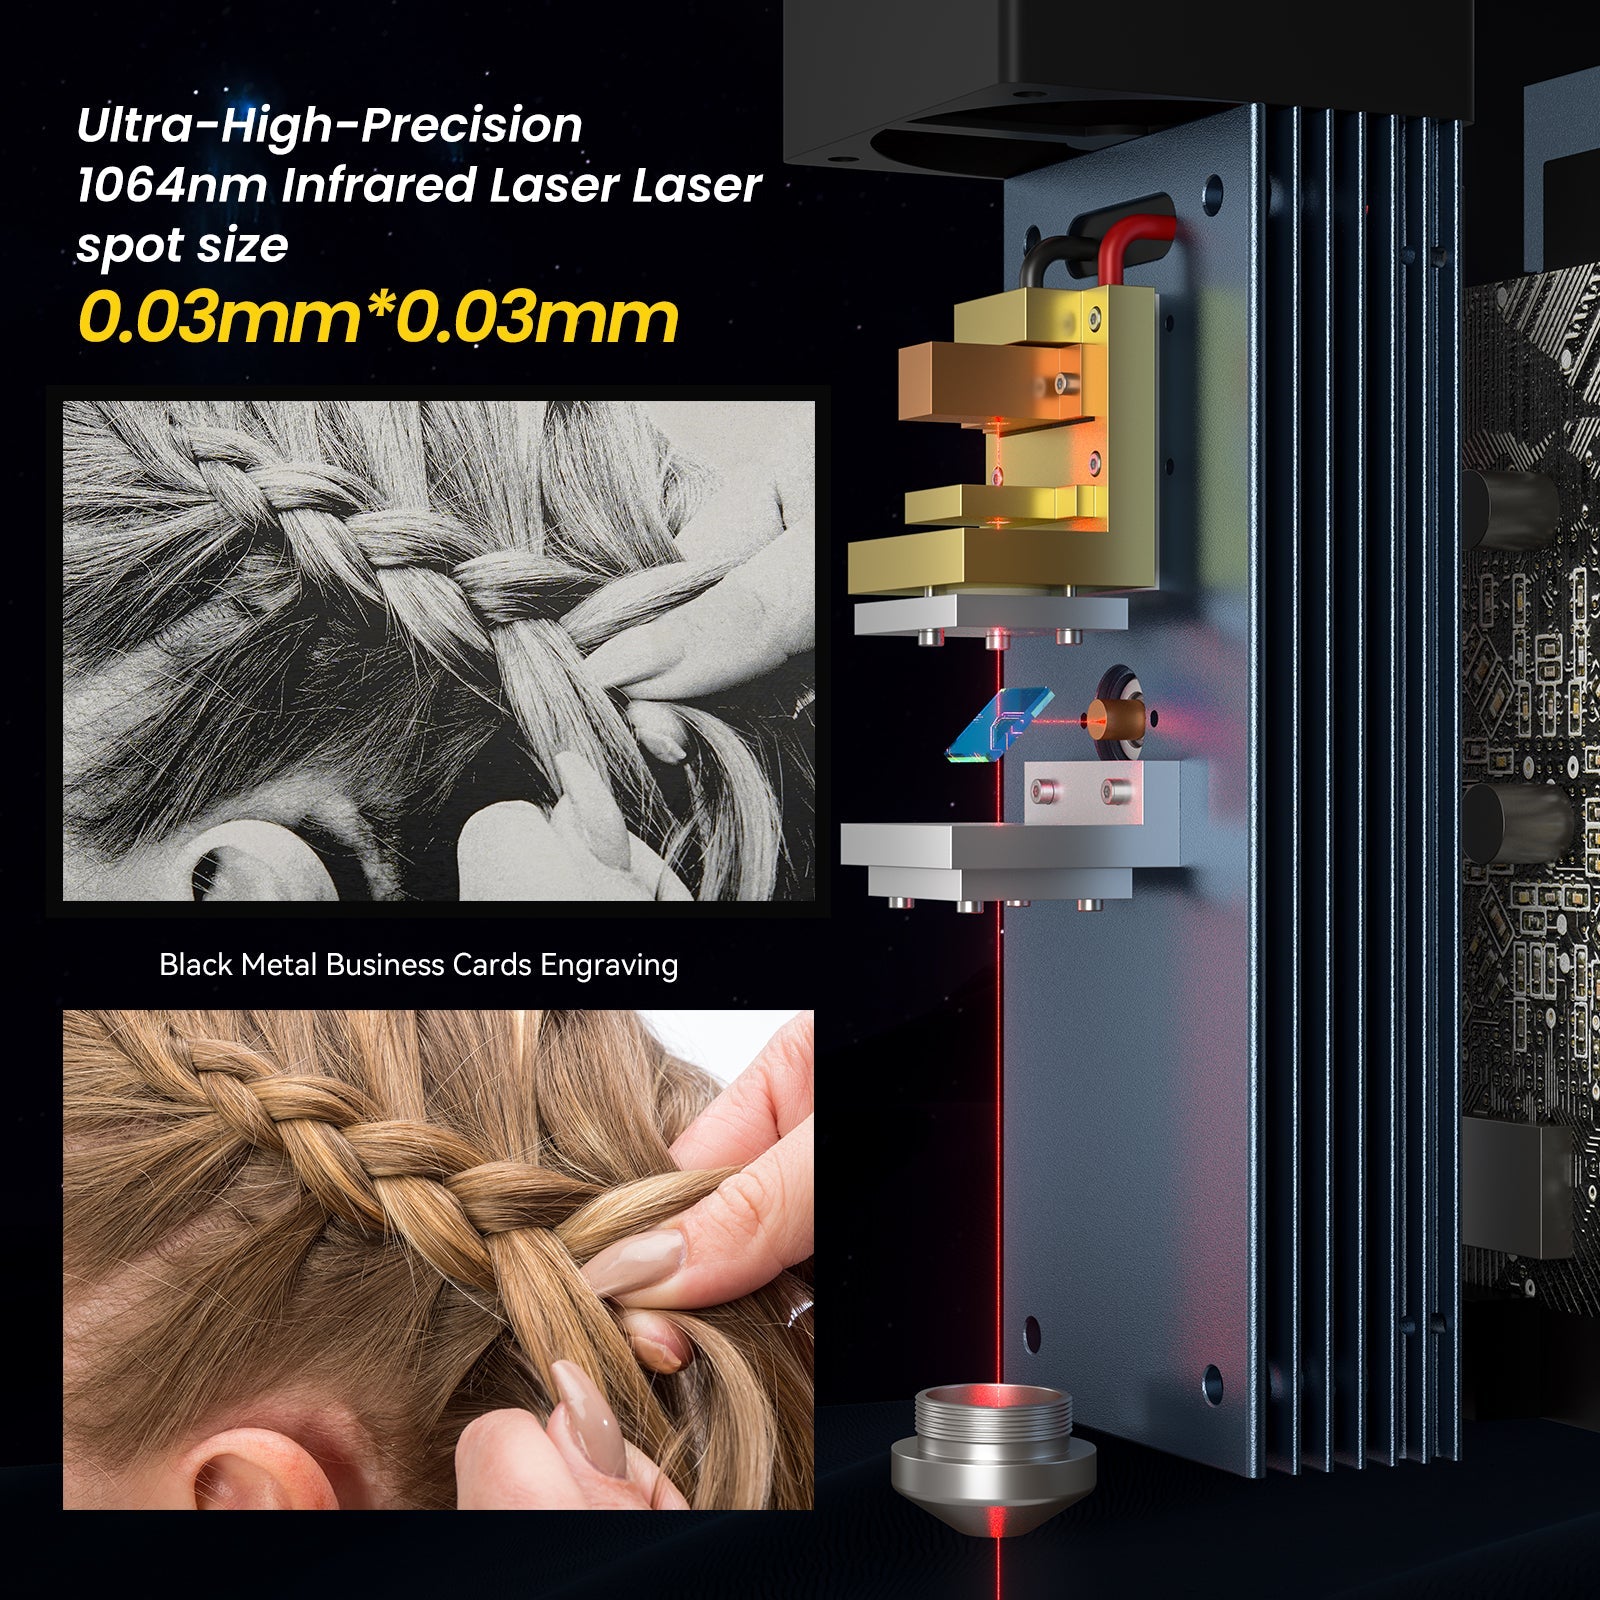 AtomStack R30 V2 Upgraded Infrared Laser Module - Laser Engraving Head for Metal and Plastic